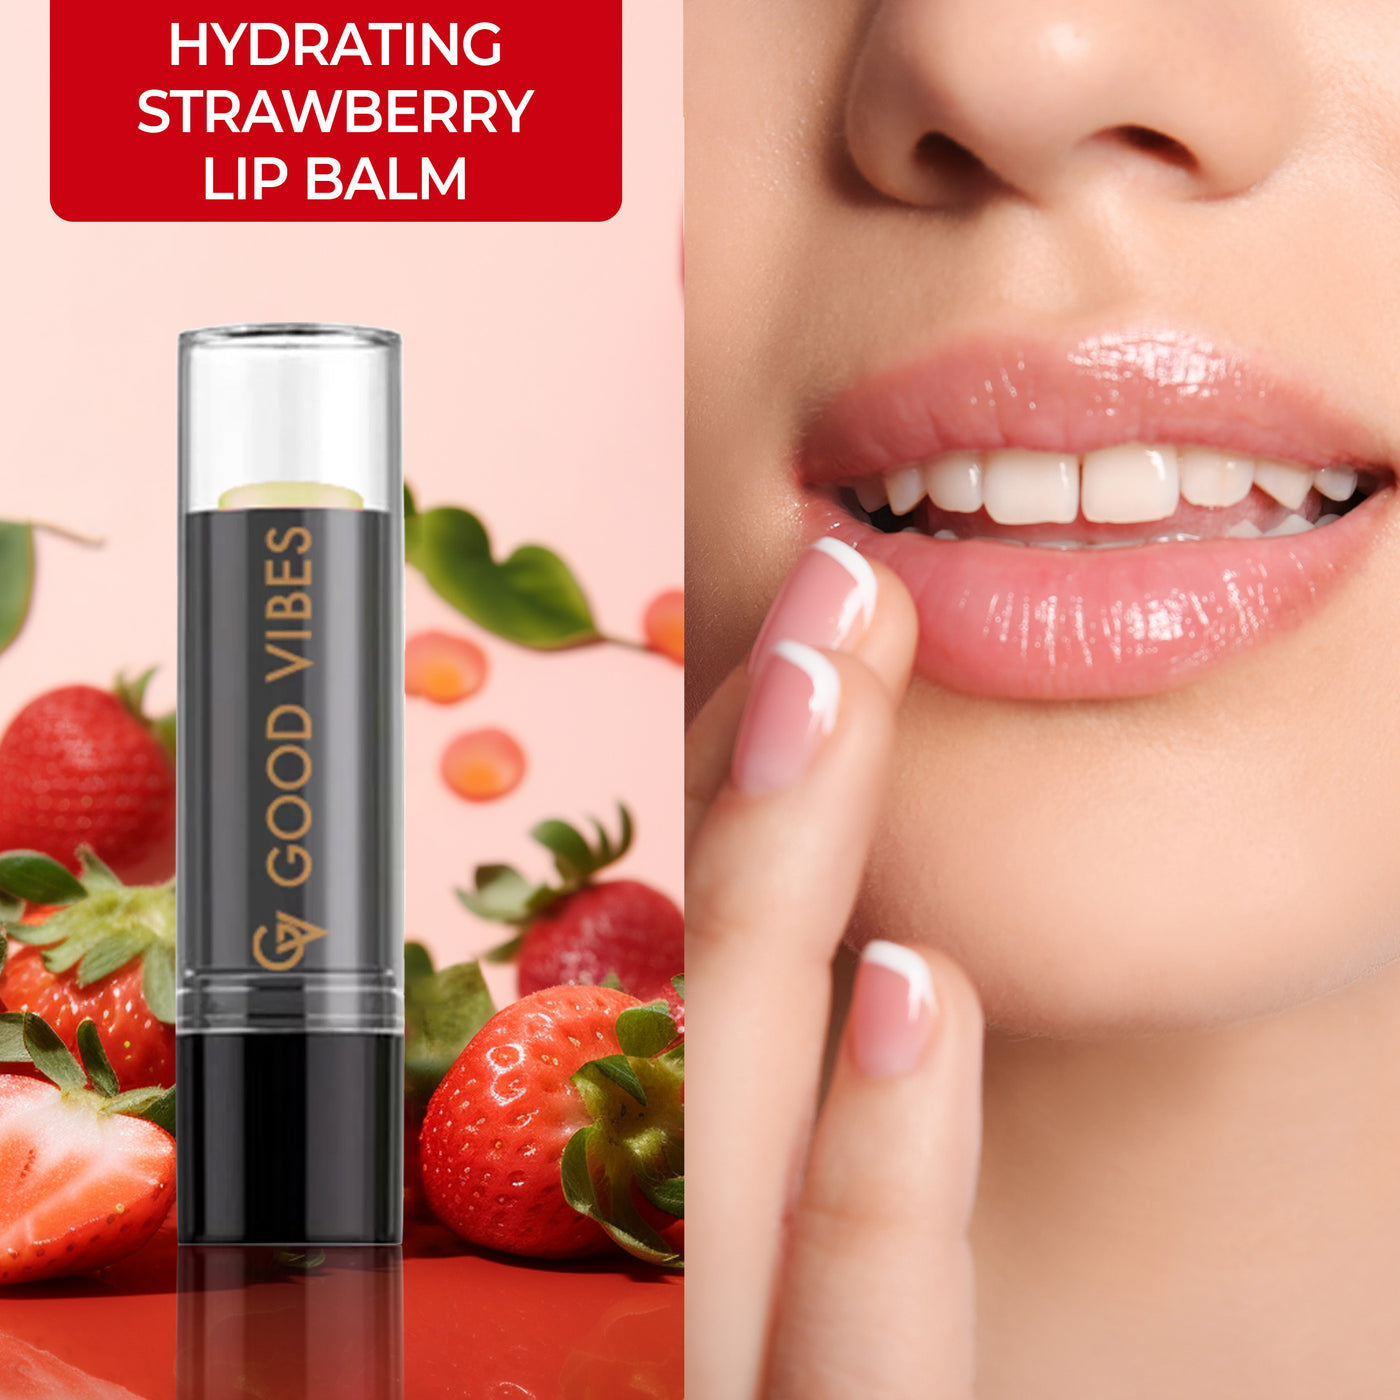 Strawberry Hydrating Lip Balm with SPF 15